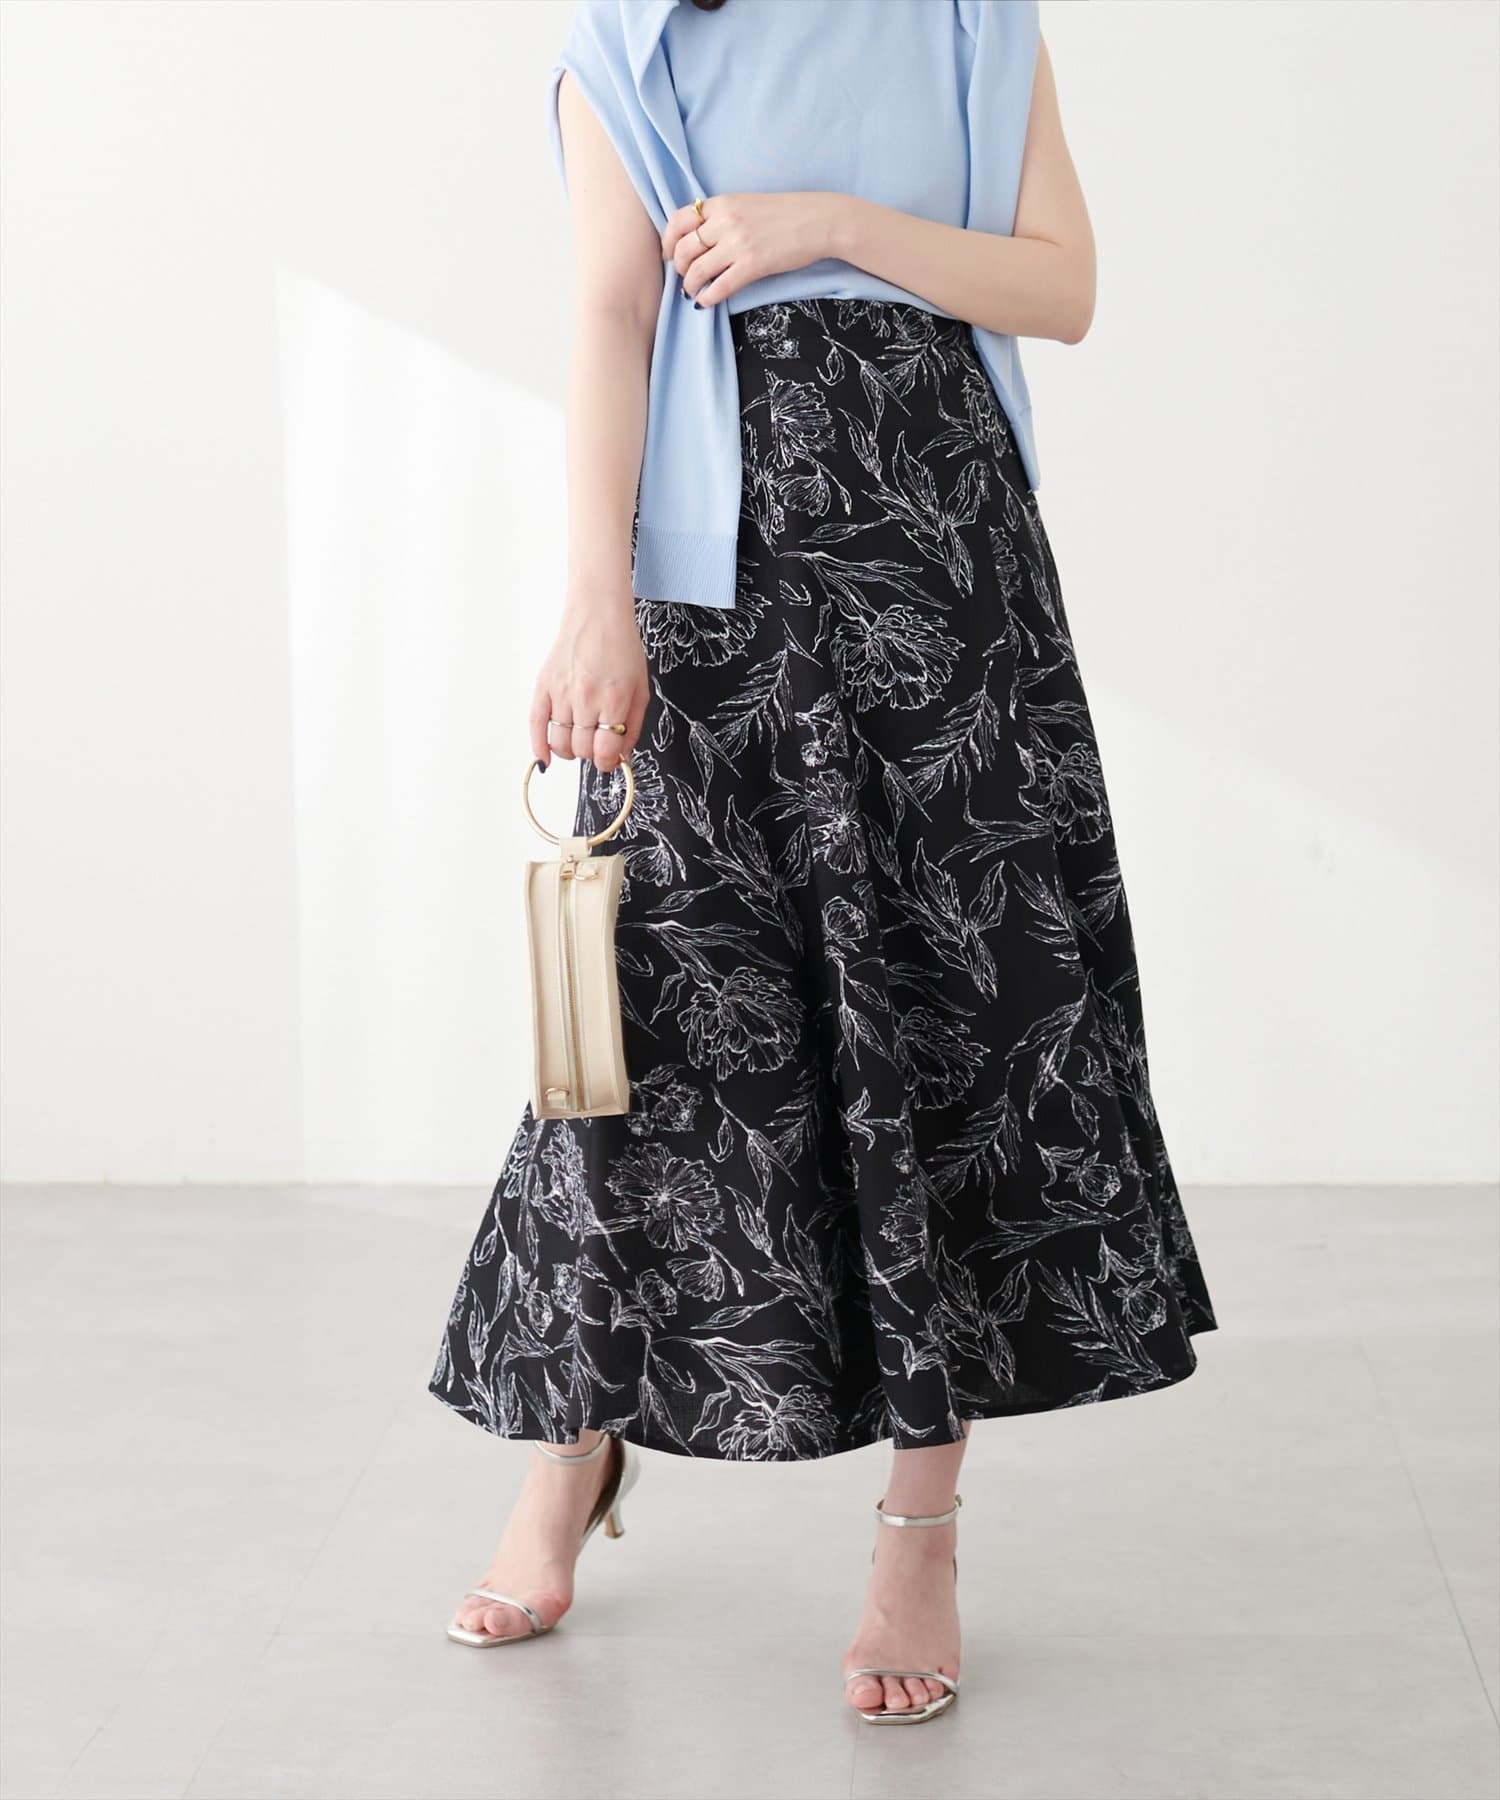 natural couture(ナチュラルクチュール) ブッチャー線画花柄フレアスカート